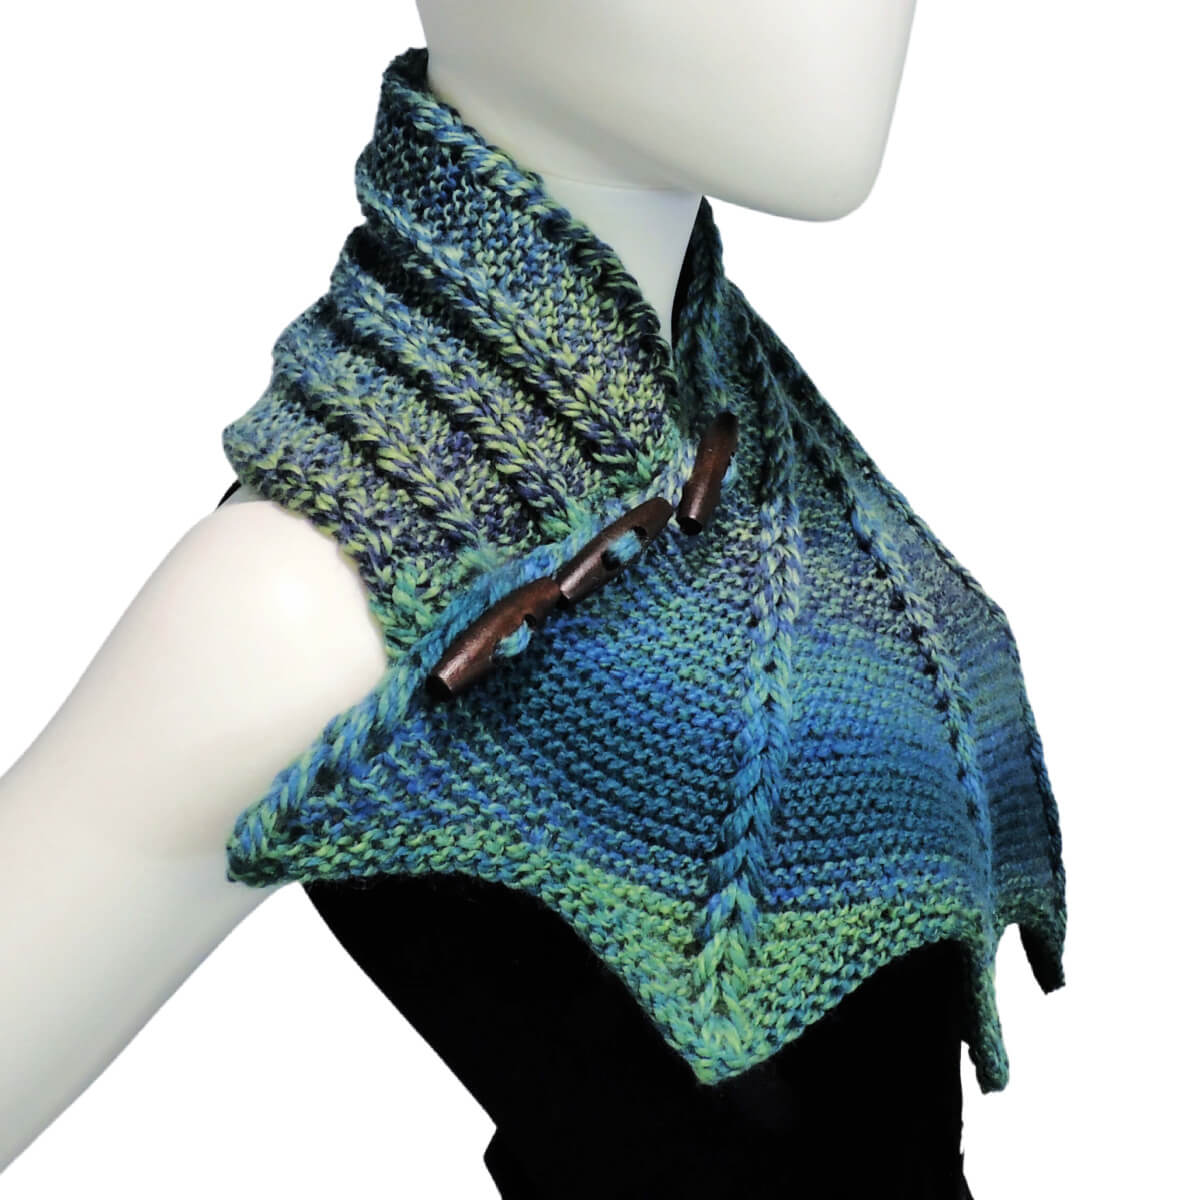 7 Free + Easy Cowl Knitting Patterns - Easy Crochet Patterns